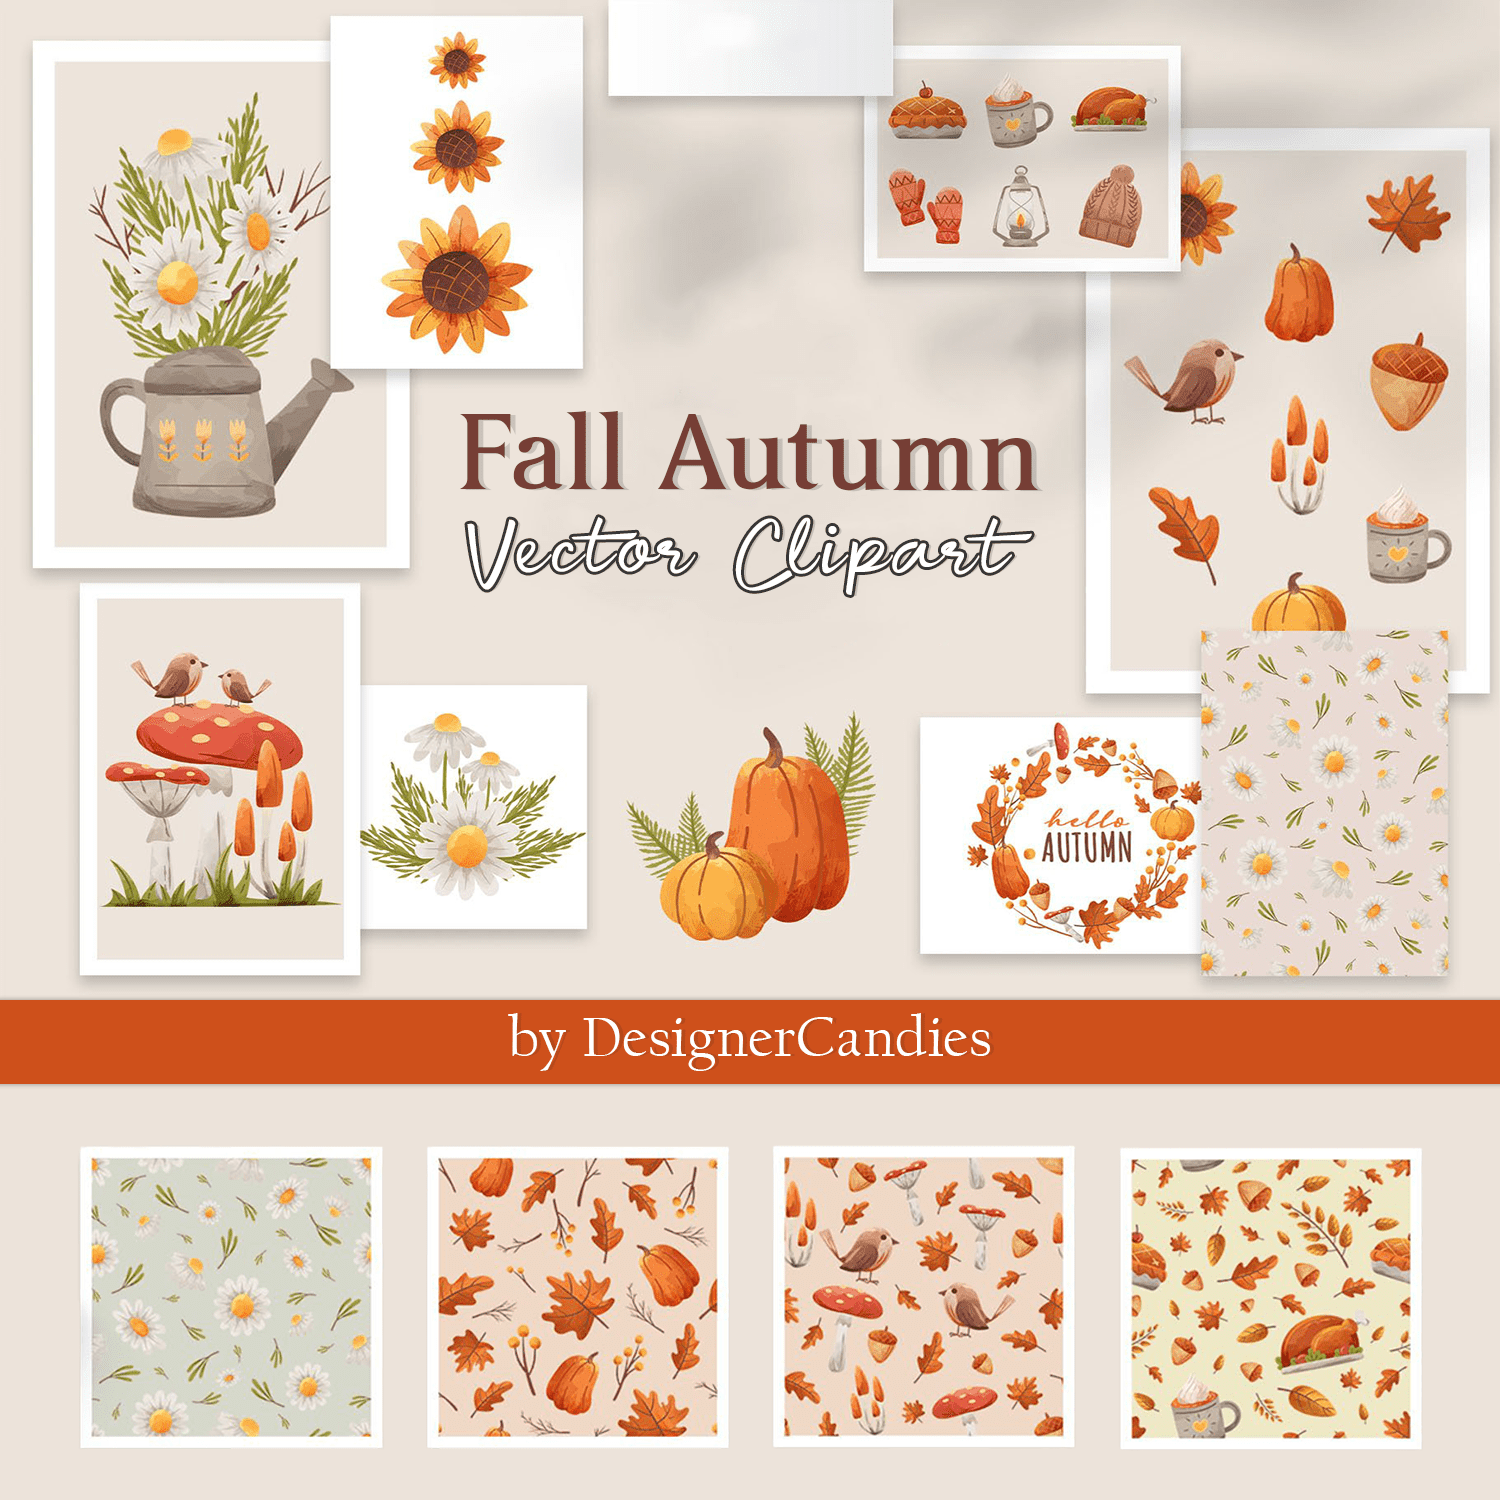 Fall Autumn Vector Clipart cover.